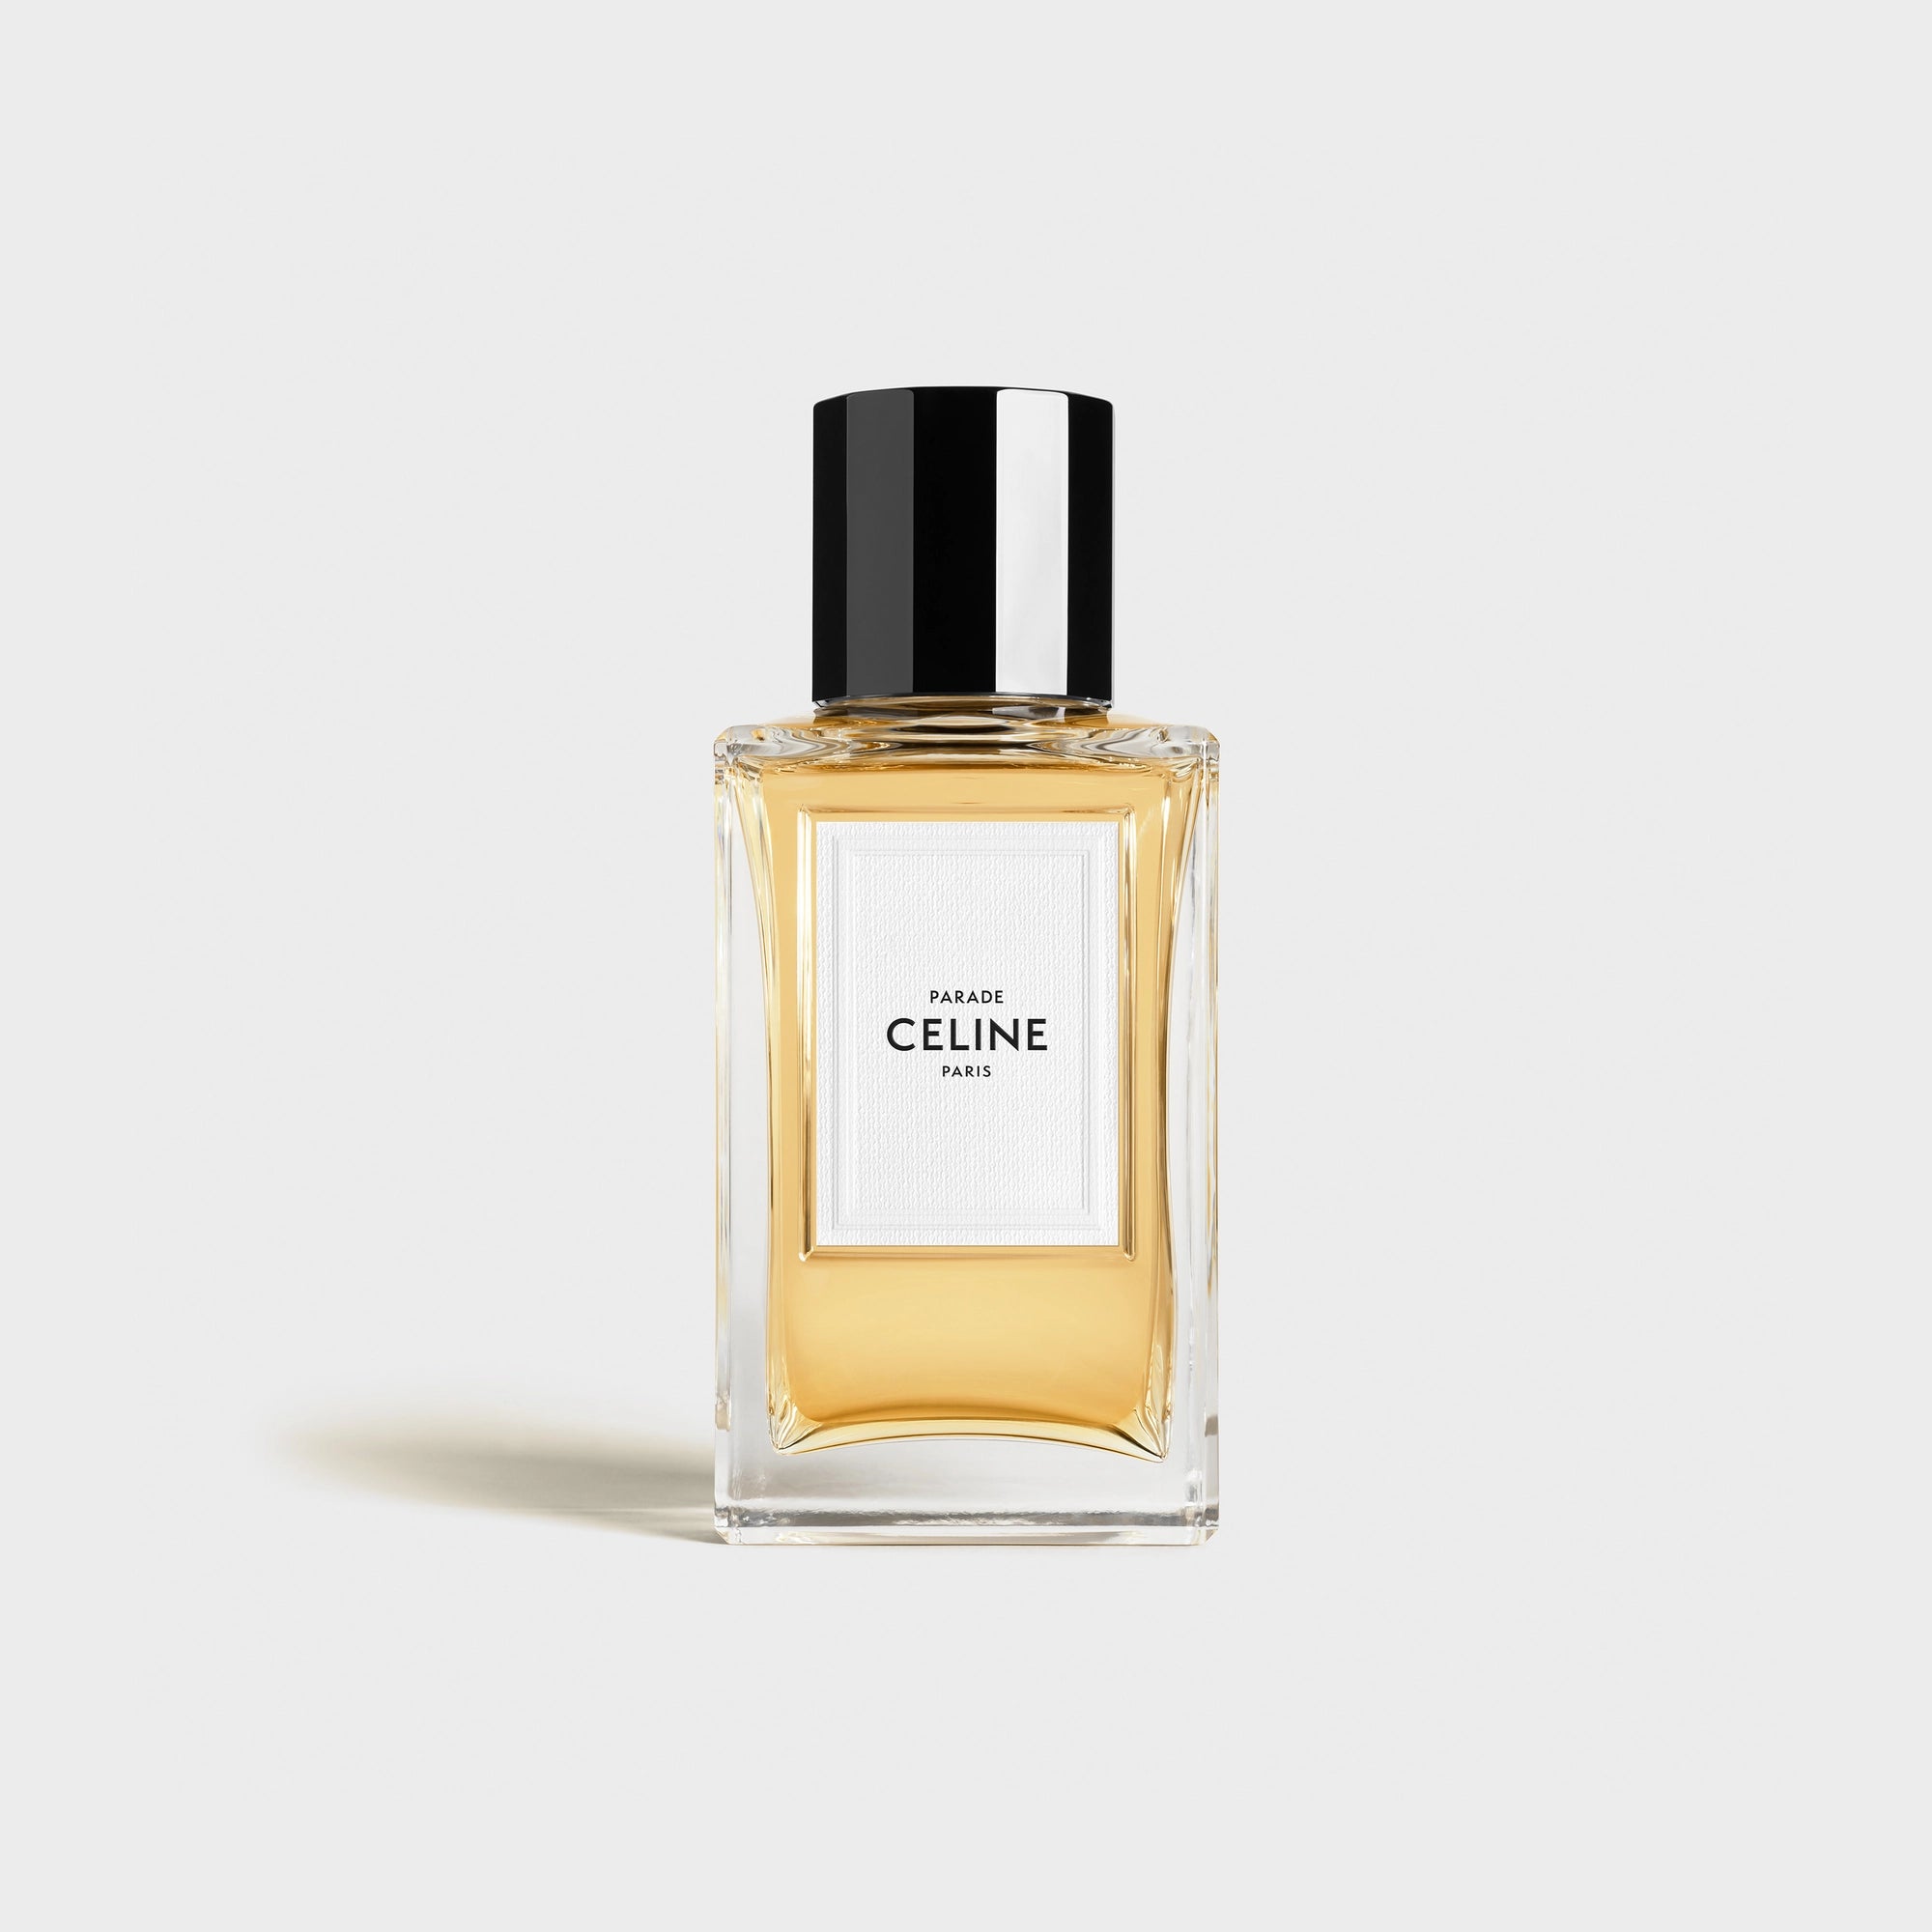 Celine Parade eau de parfum by Celine